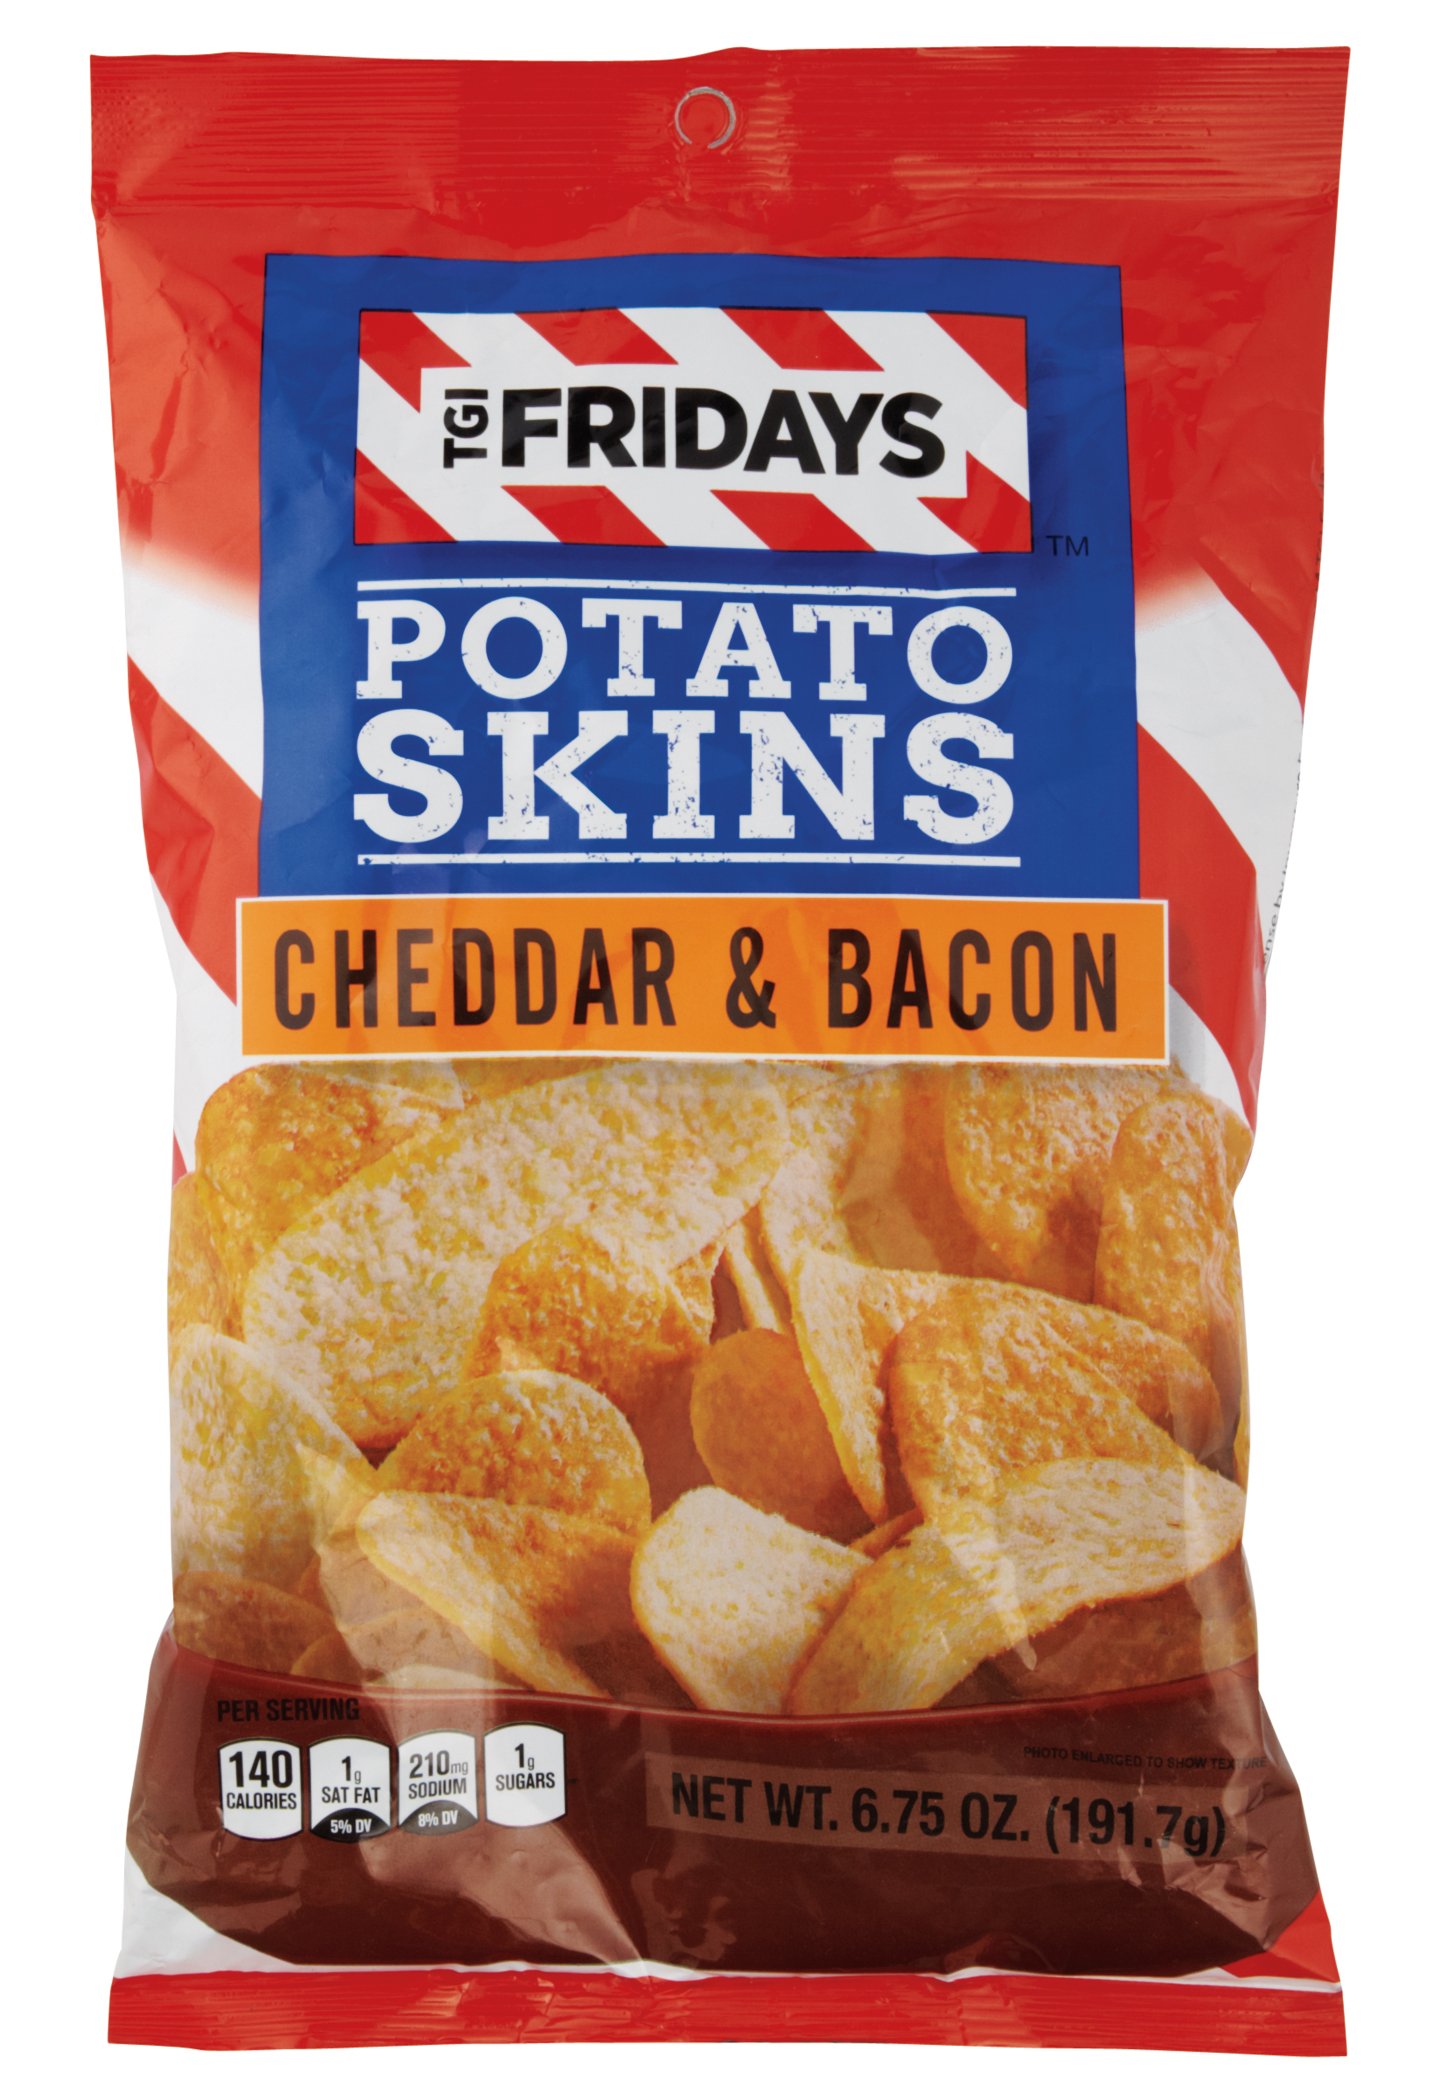 Tgi Fridays Potato Skins Cheddar Bacon Shop Chips At H E B